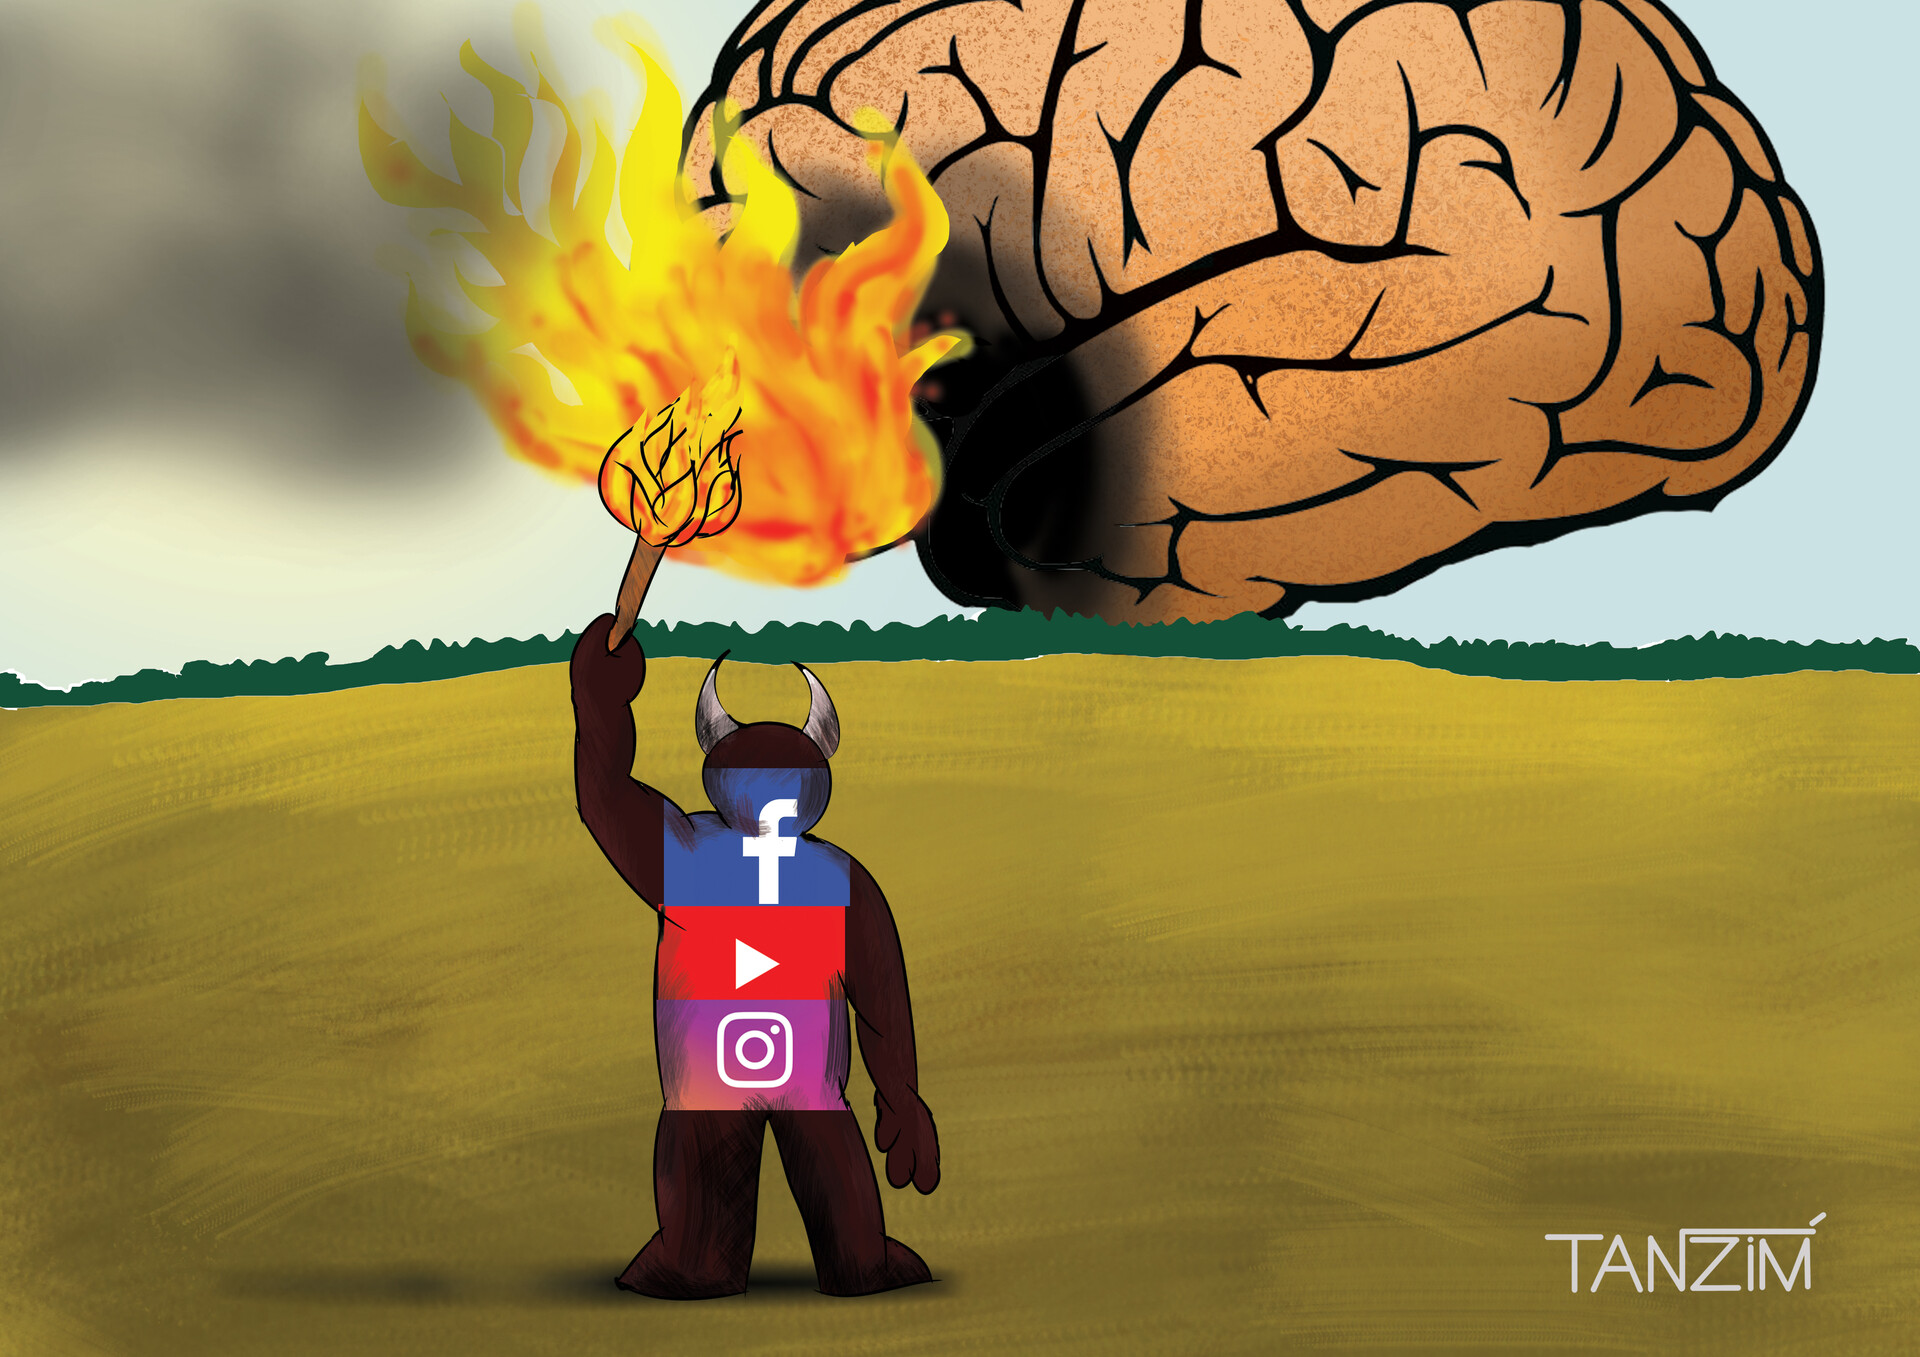 ArtStation - Cartoon about impact of social media